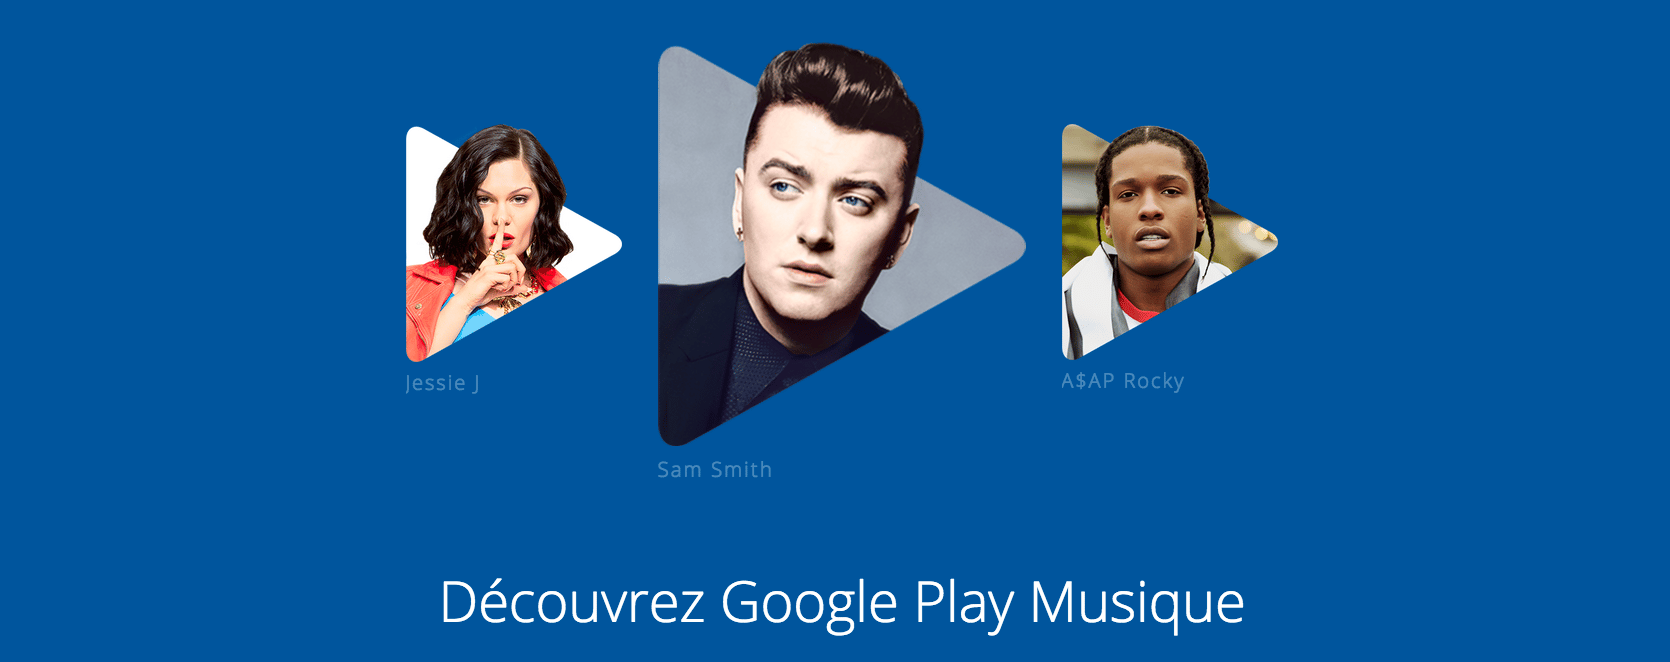 capture google play music